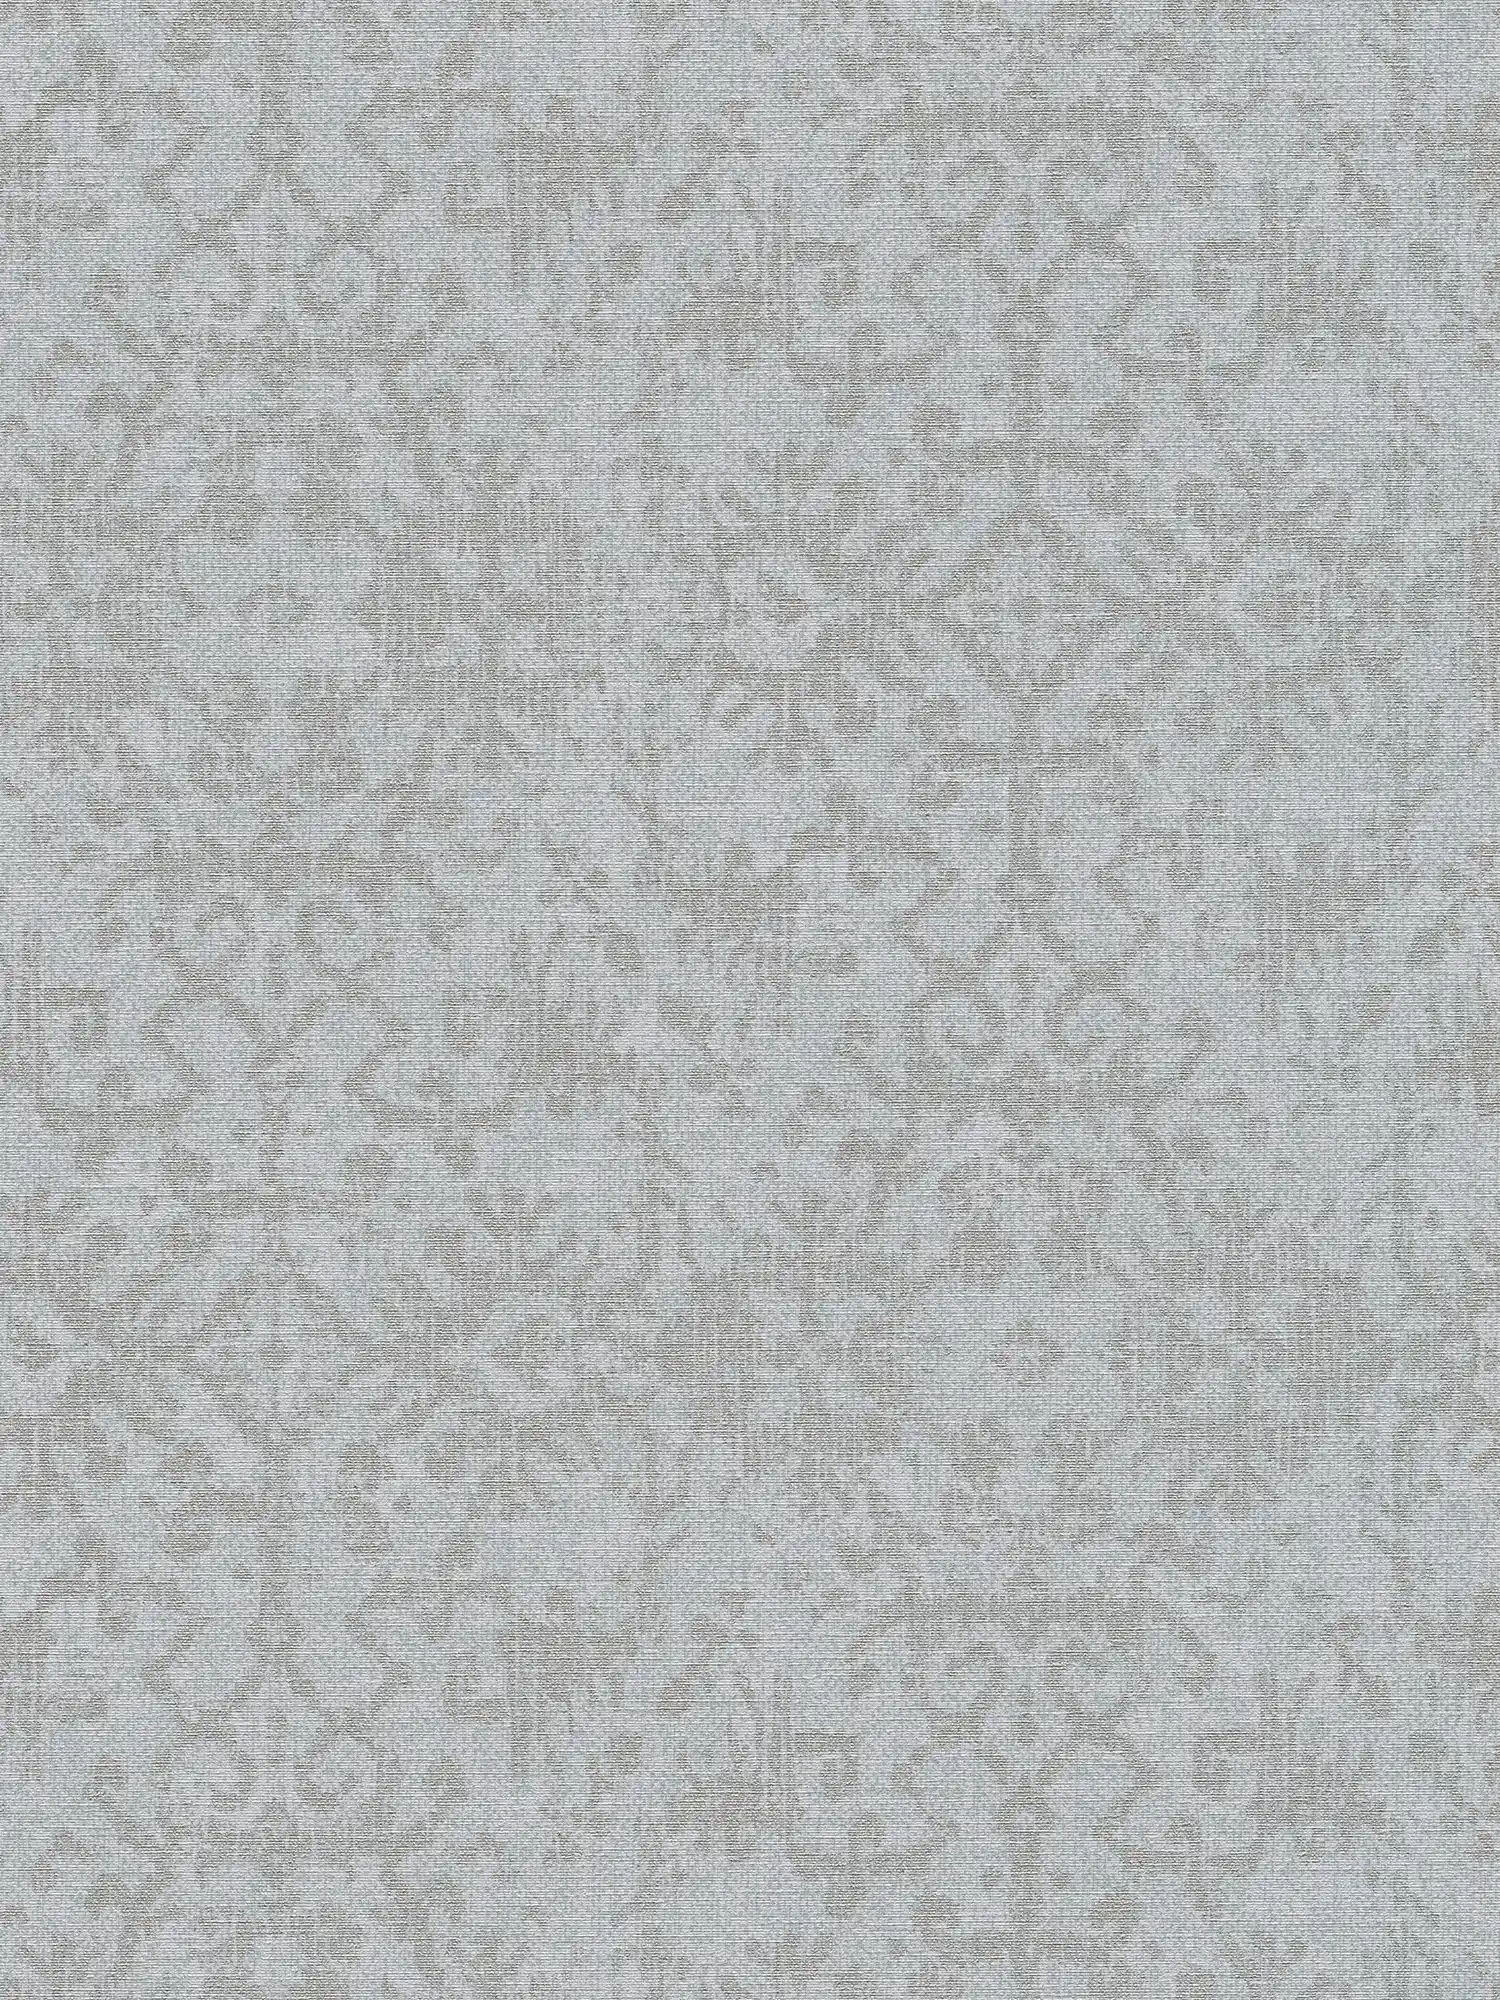 Textiloptik Tapete Ethno Ornament Muster – Grau
